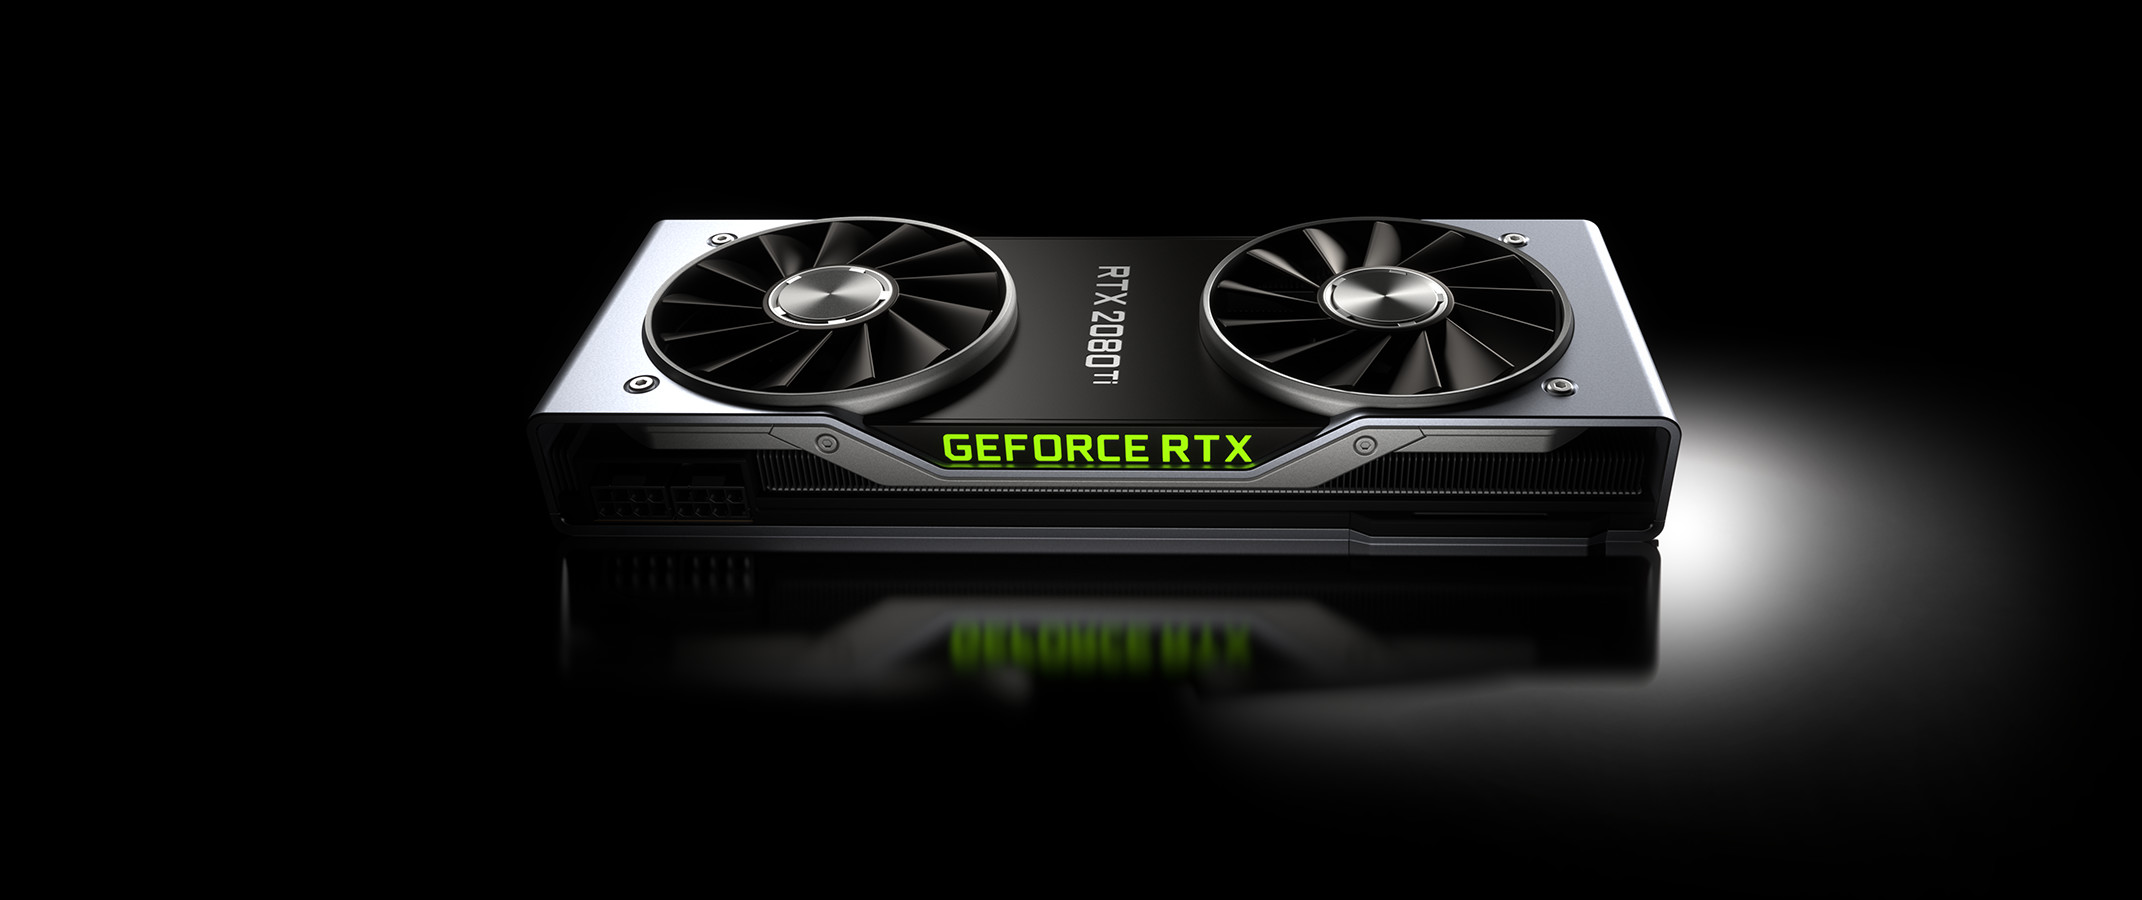 NVIDIA GeForce RTX 20